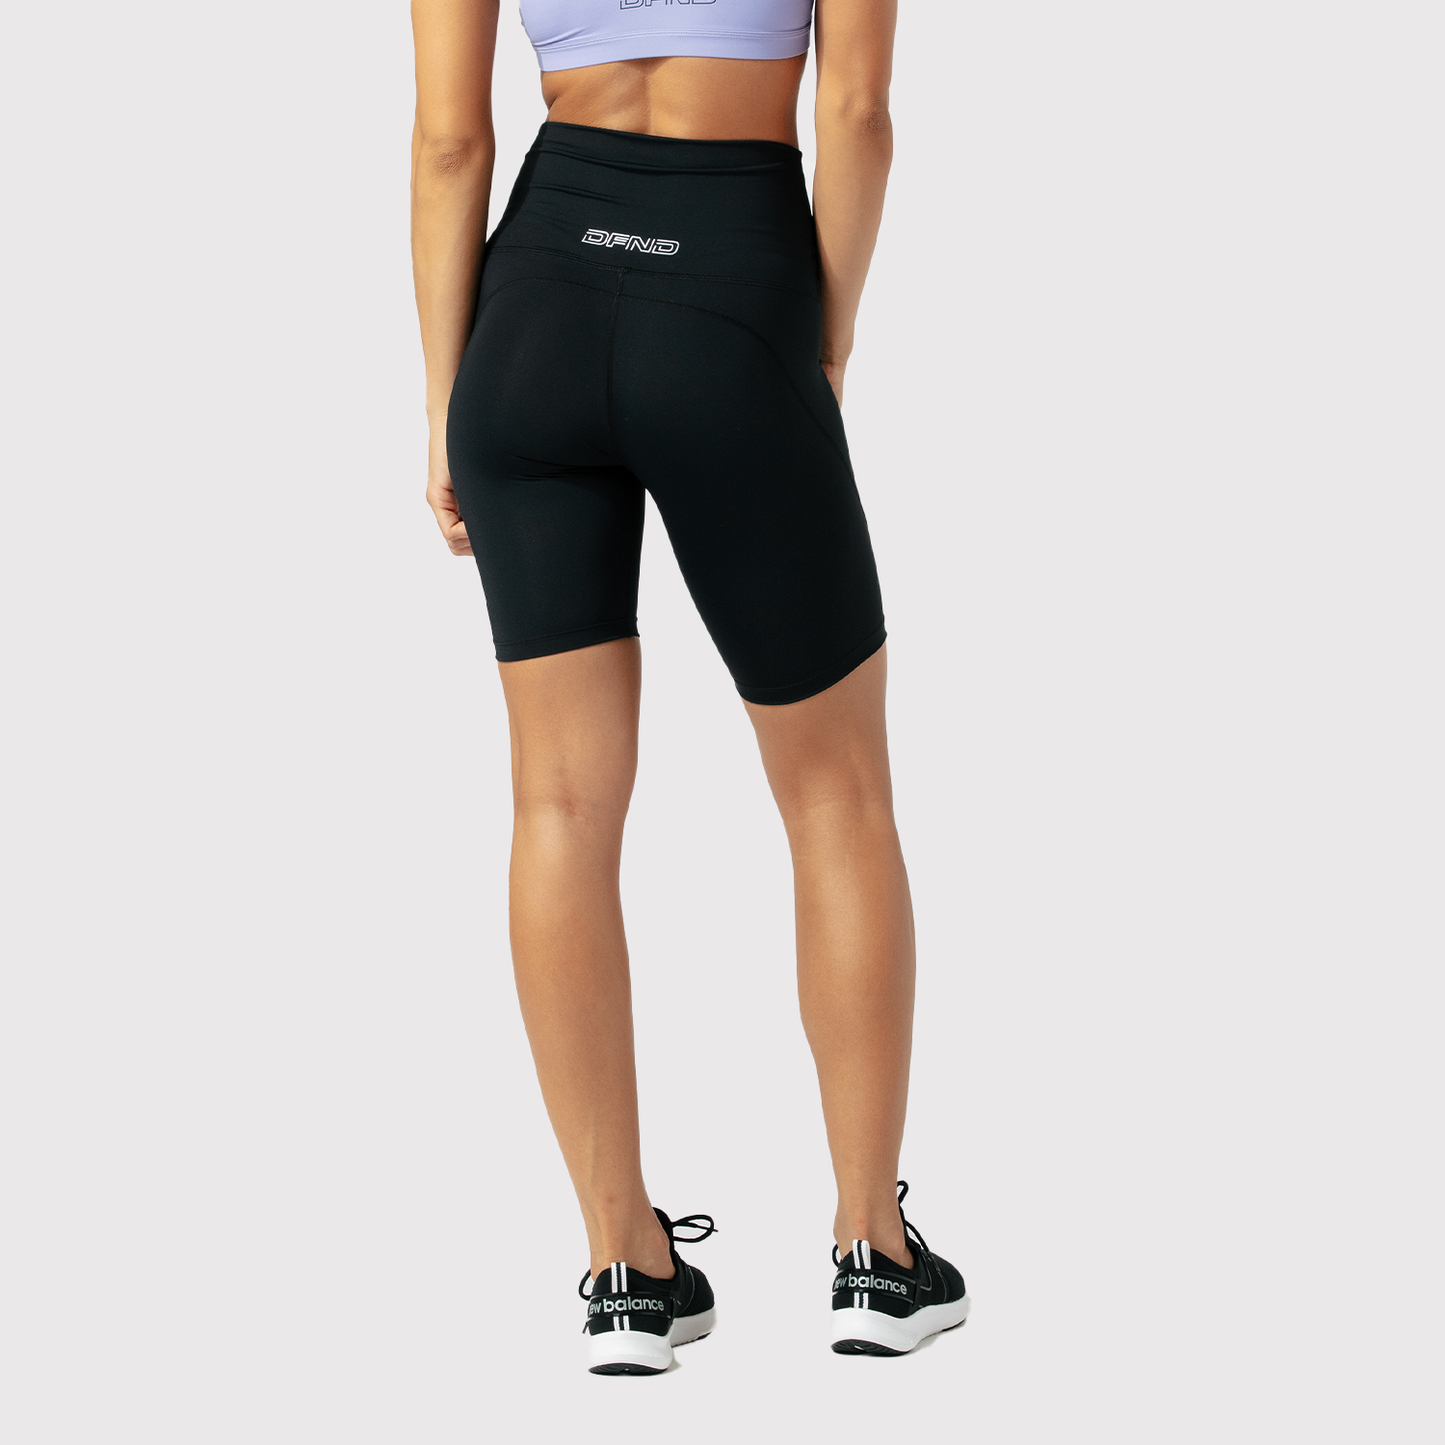 Active Intent Women's Compression Fit Shorts Black